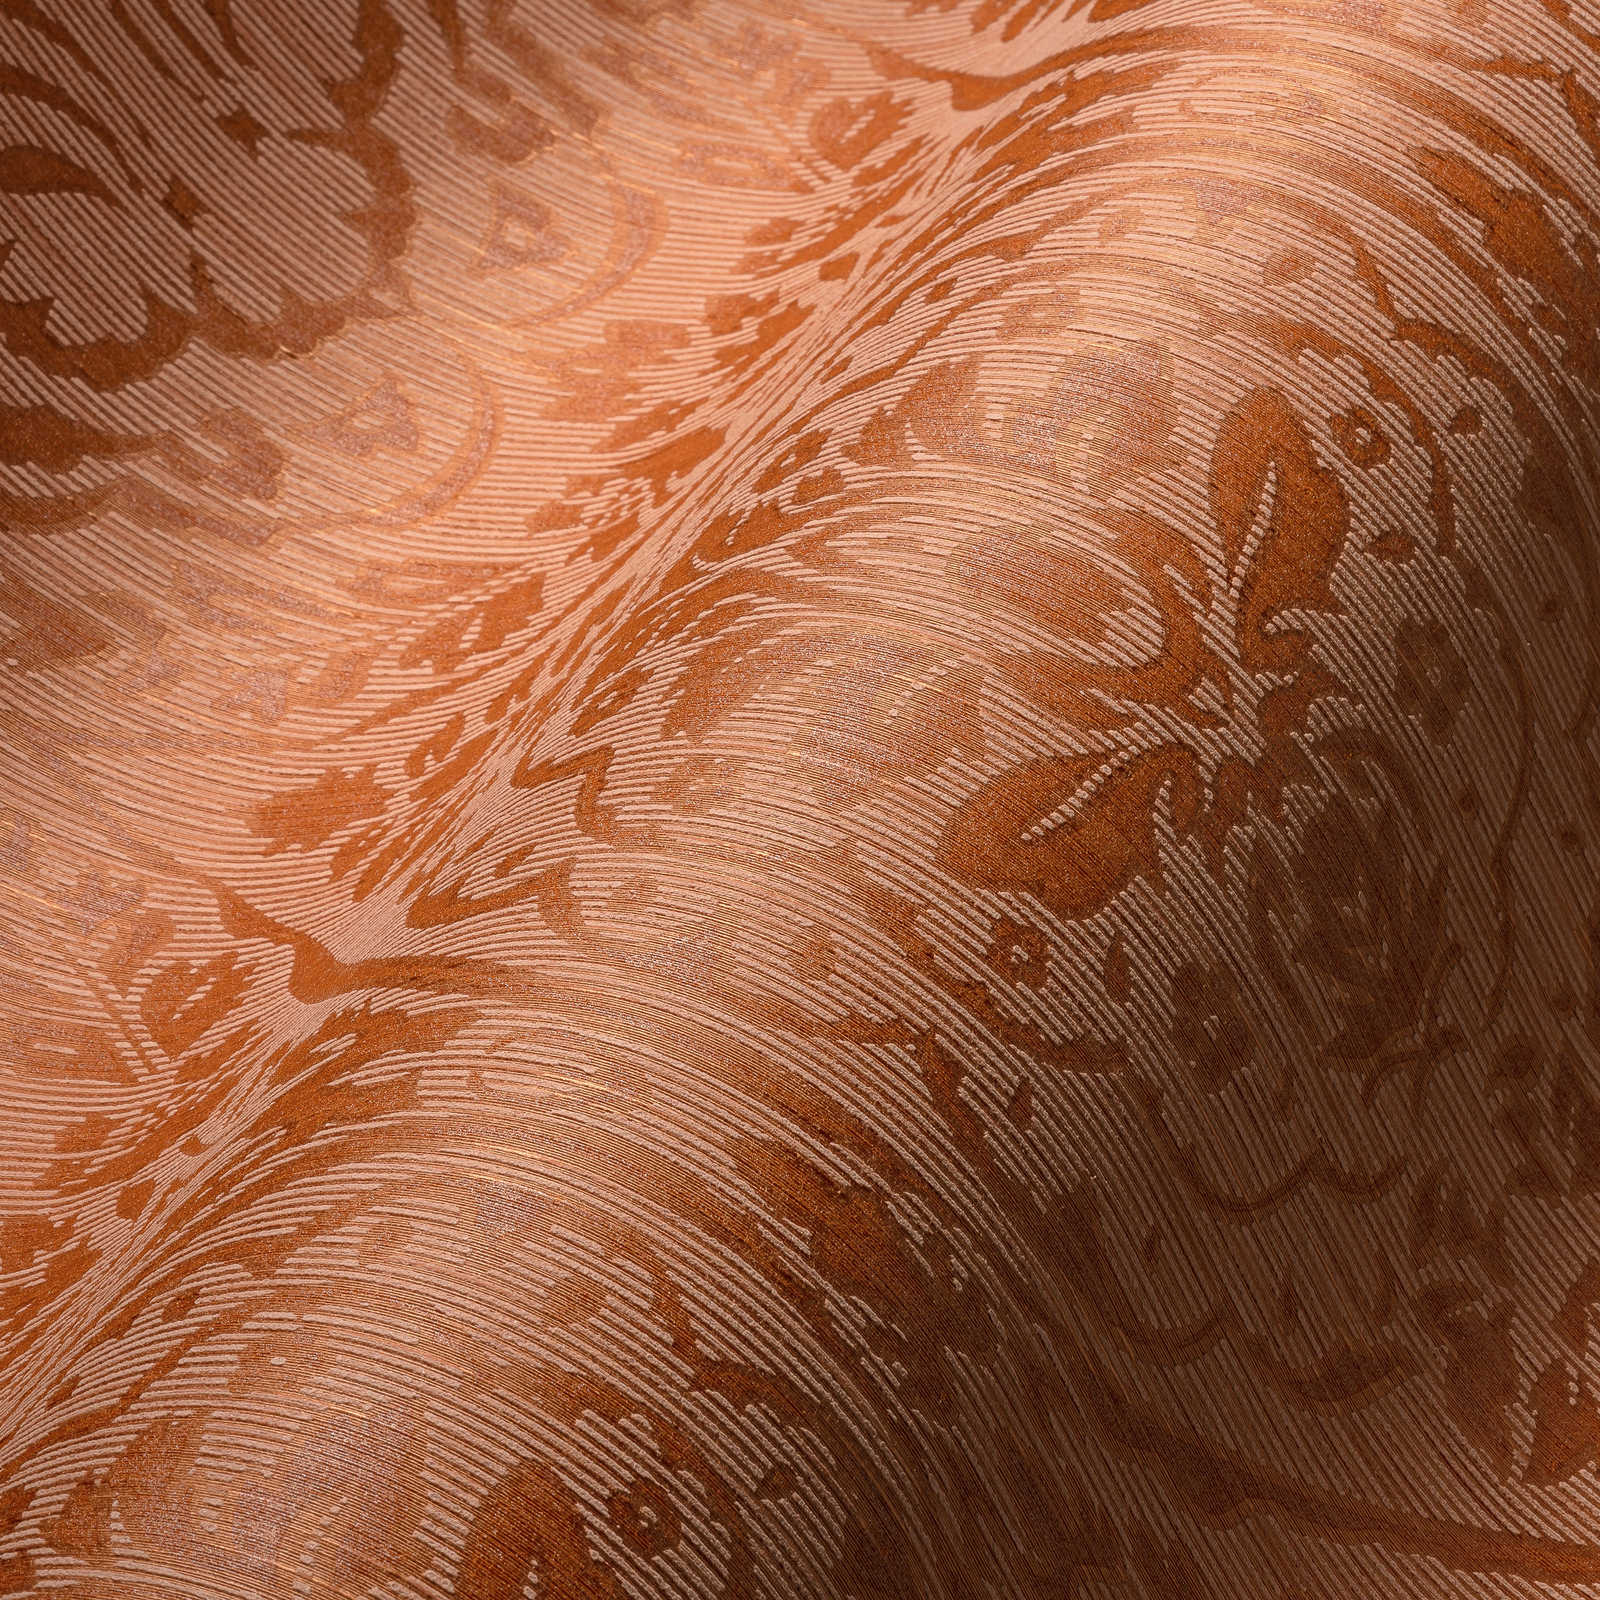             Tapete florales Ornamentmuster mit dimensionalem Struktureffekt – Orange
        